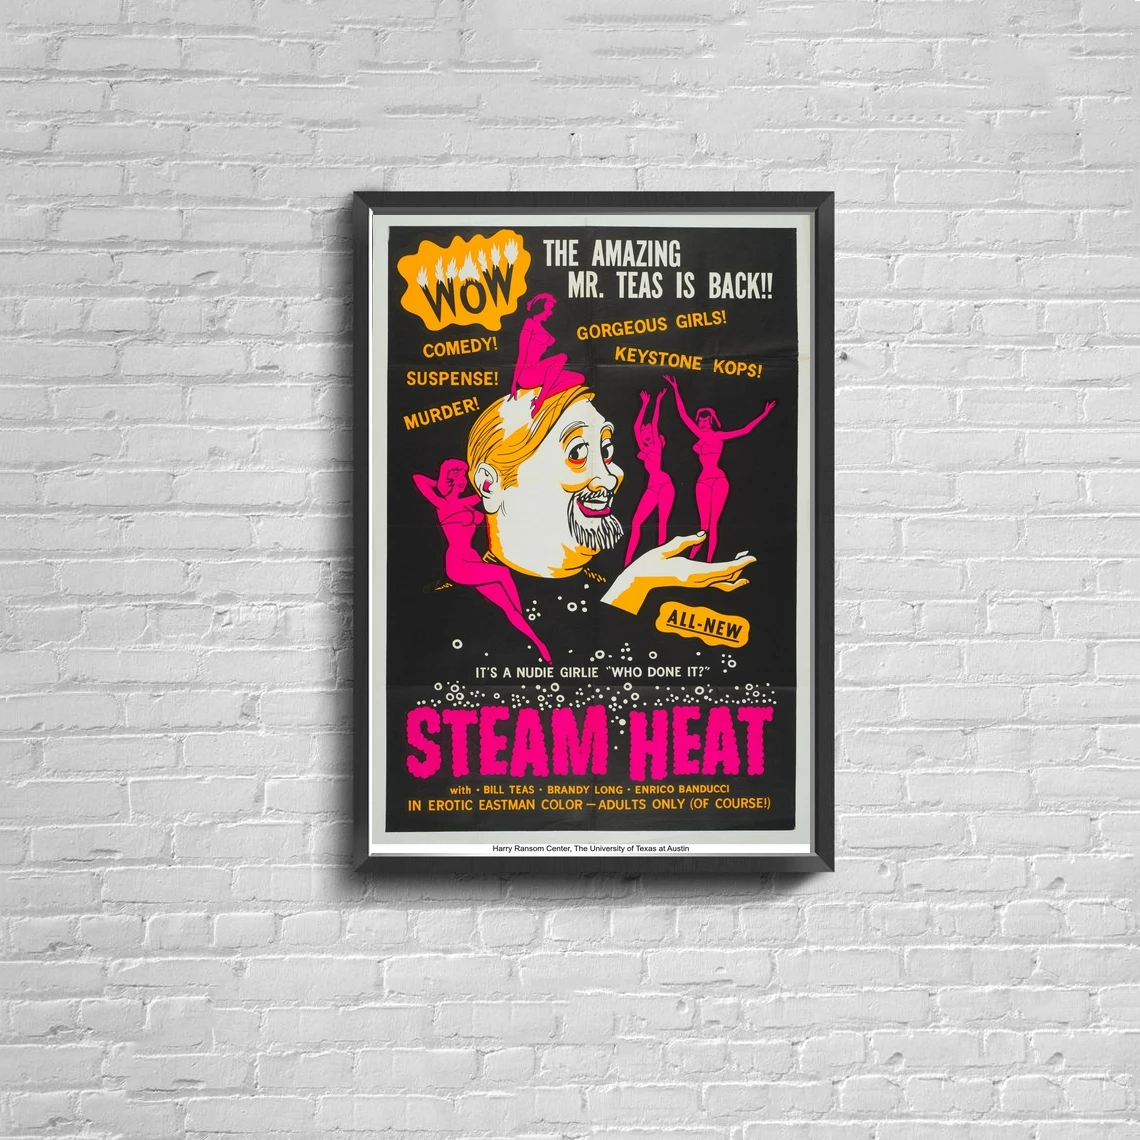 Steam heat песня фото 73